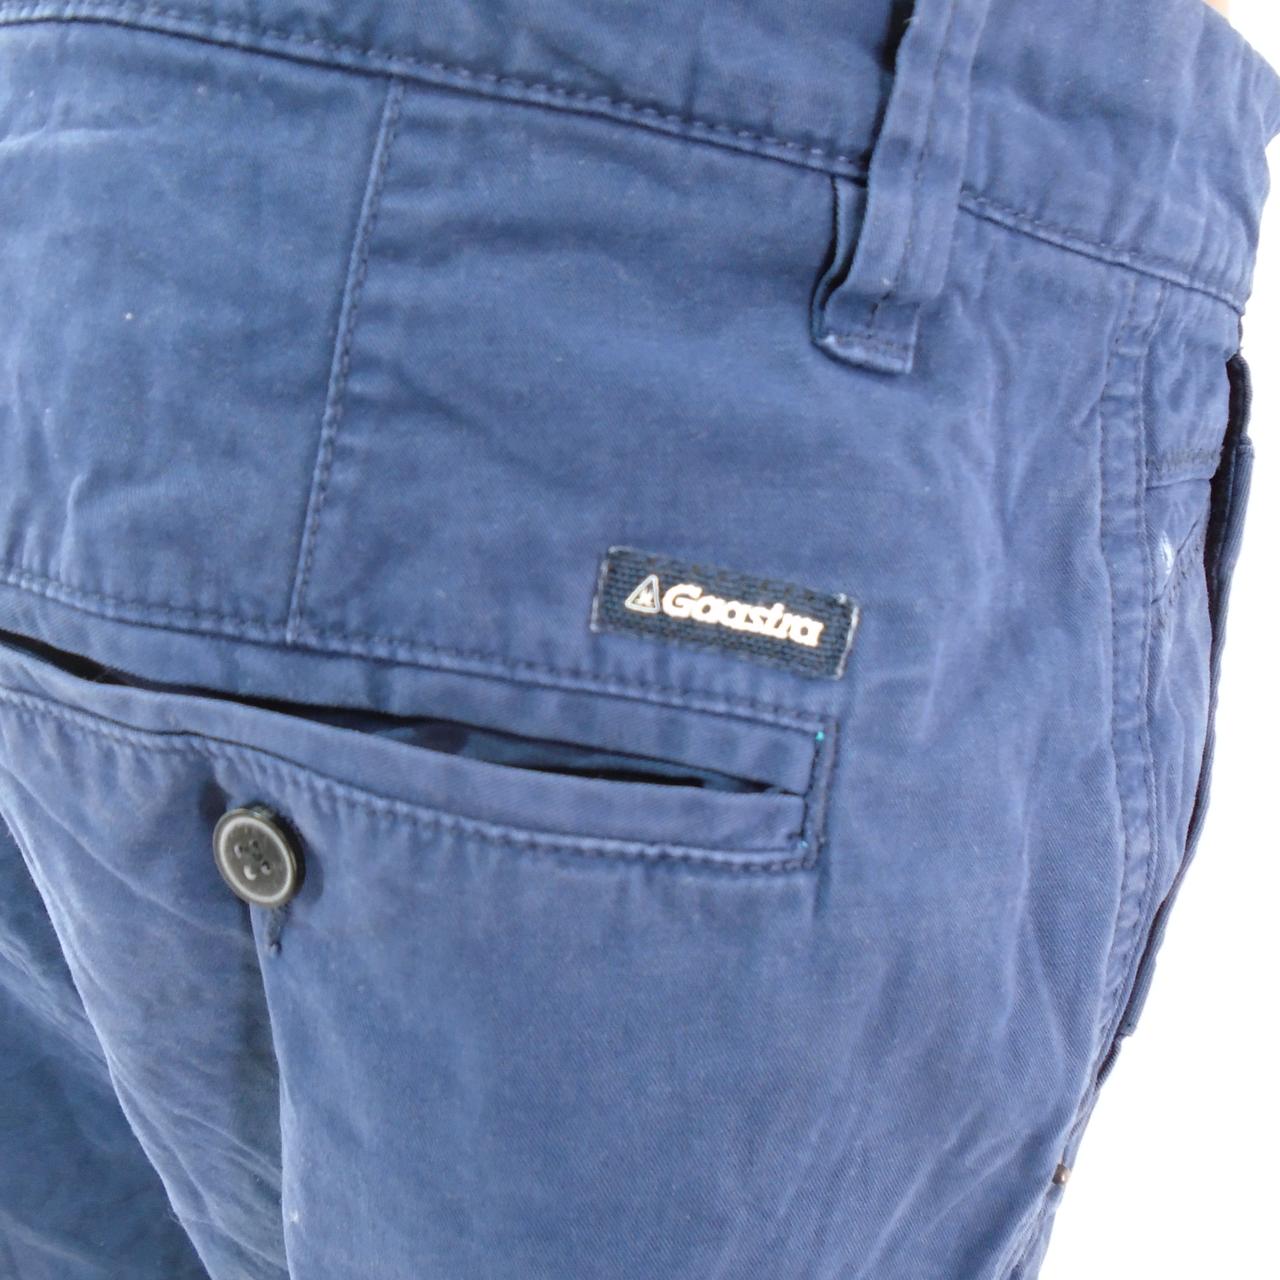 Men's Shorts Gaastra. Dark blue. S. Used. Good